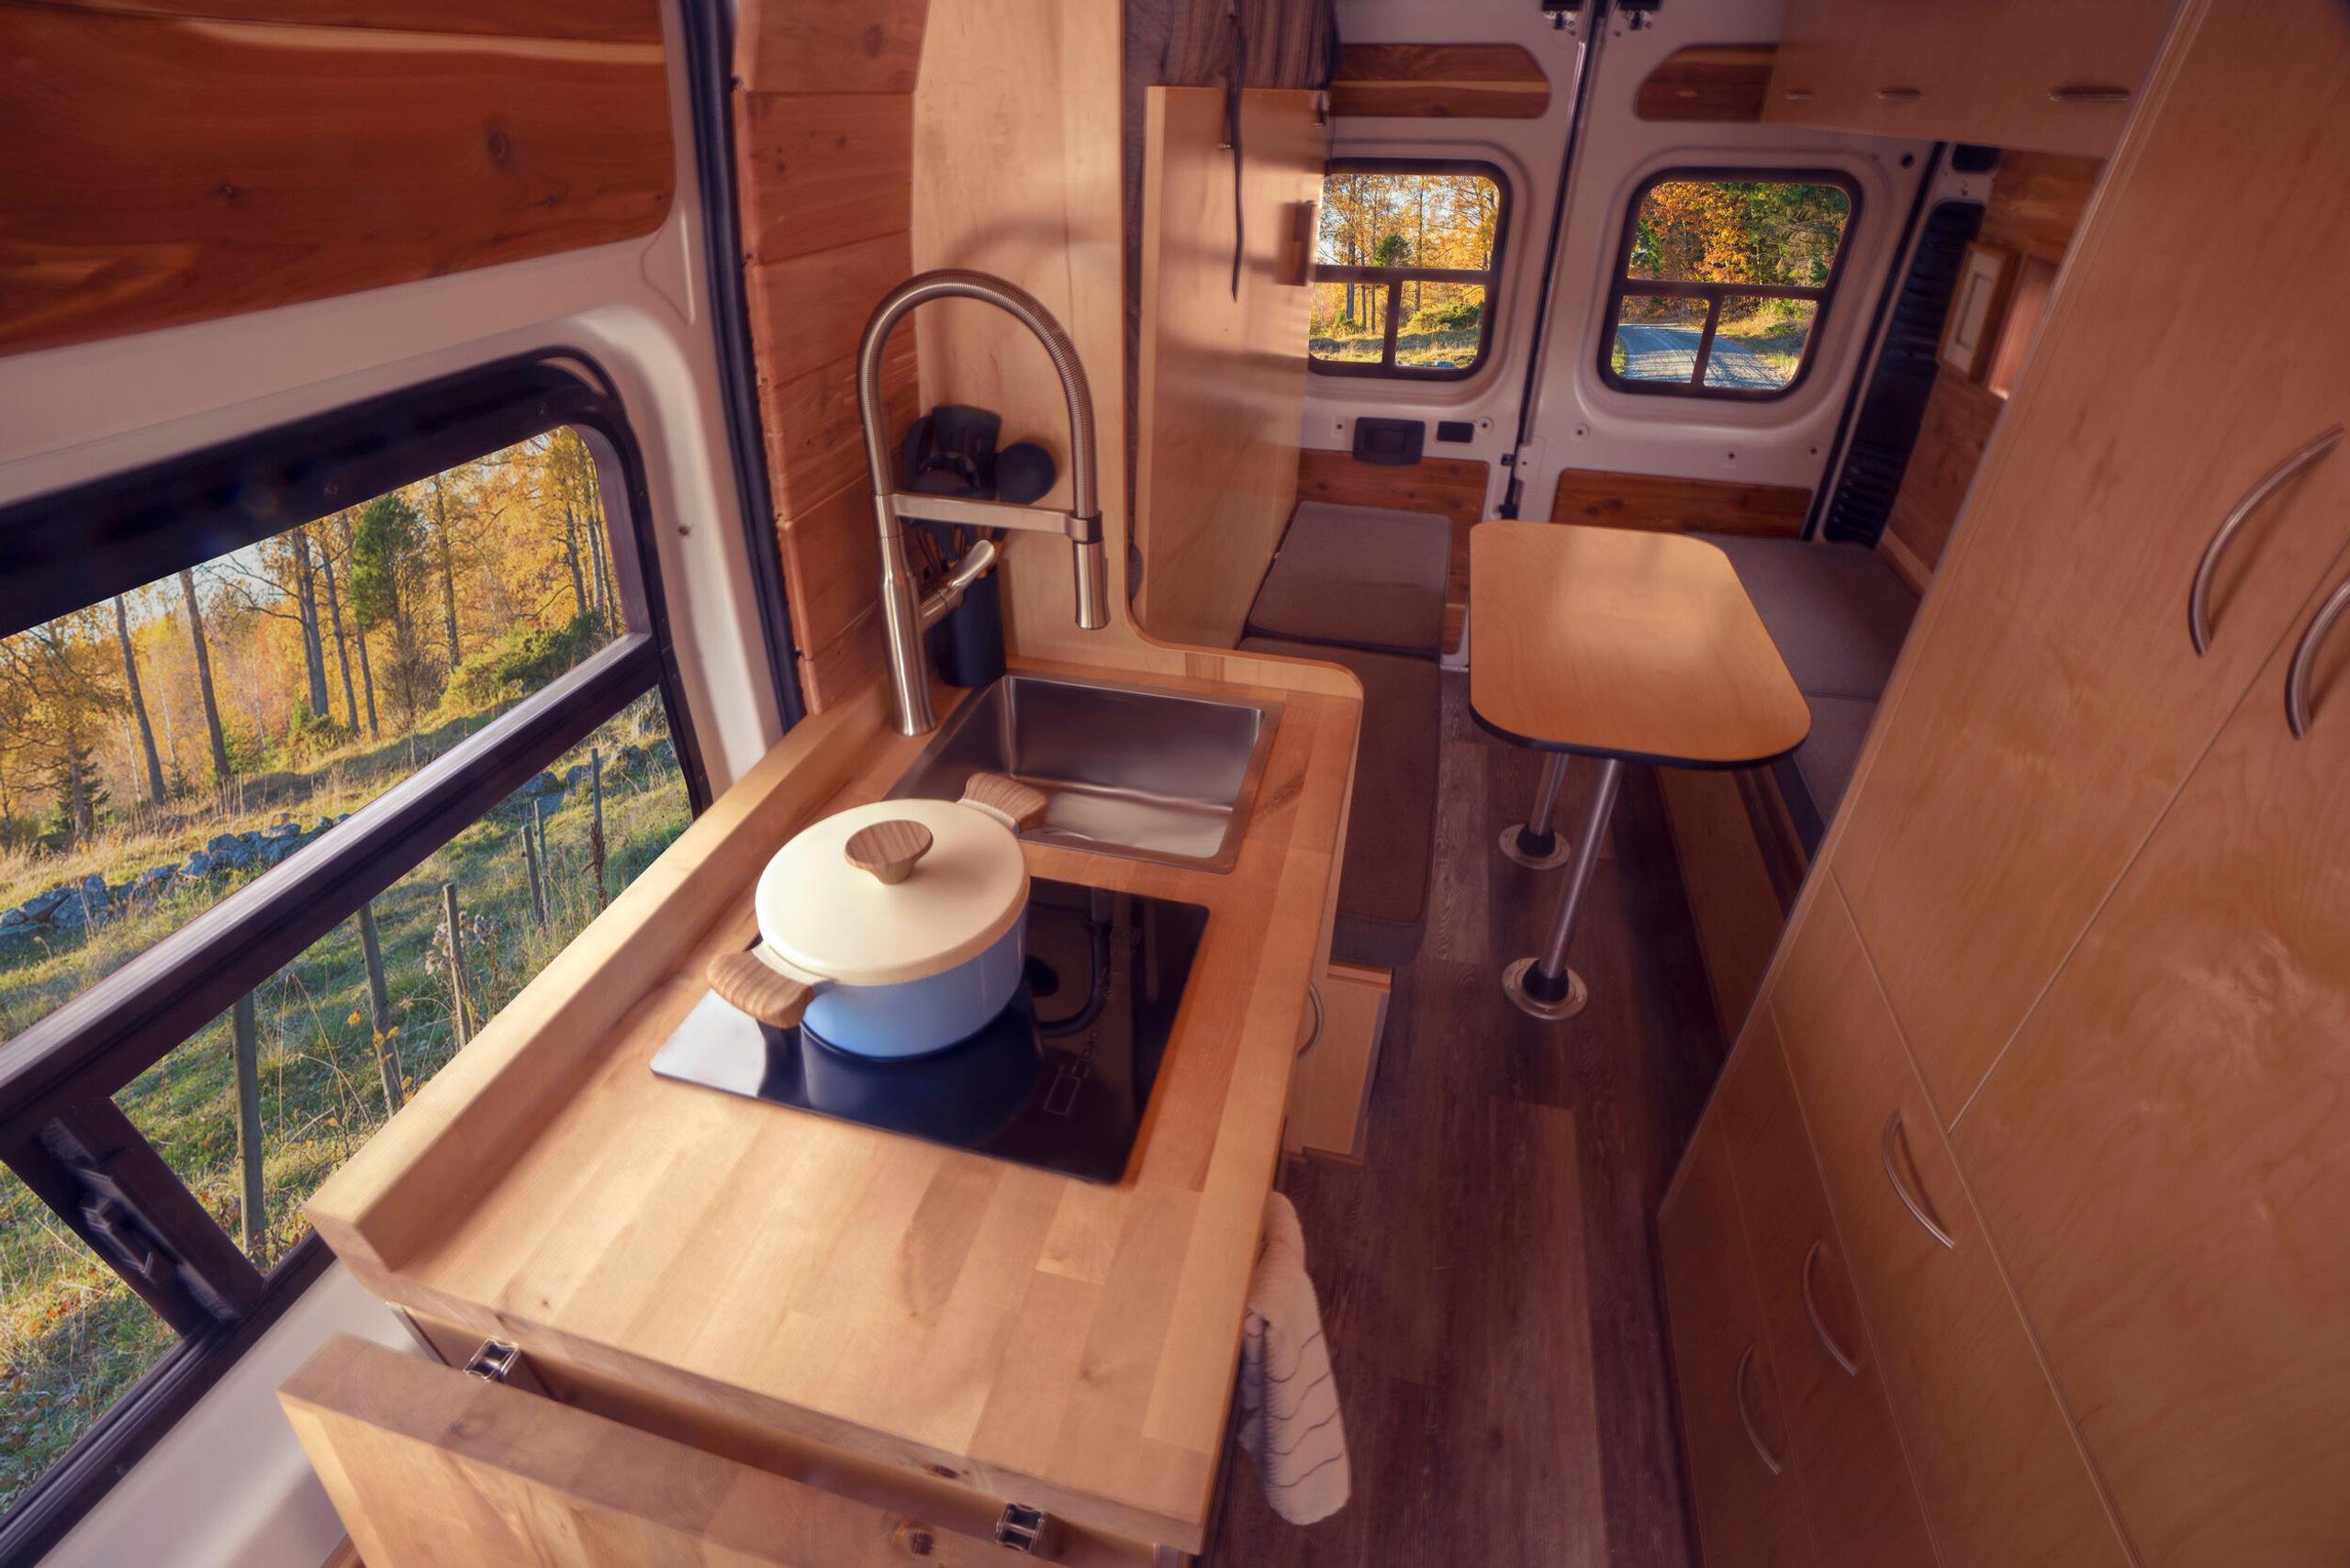 kitchen inside camper van